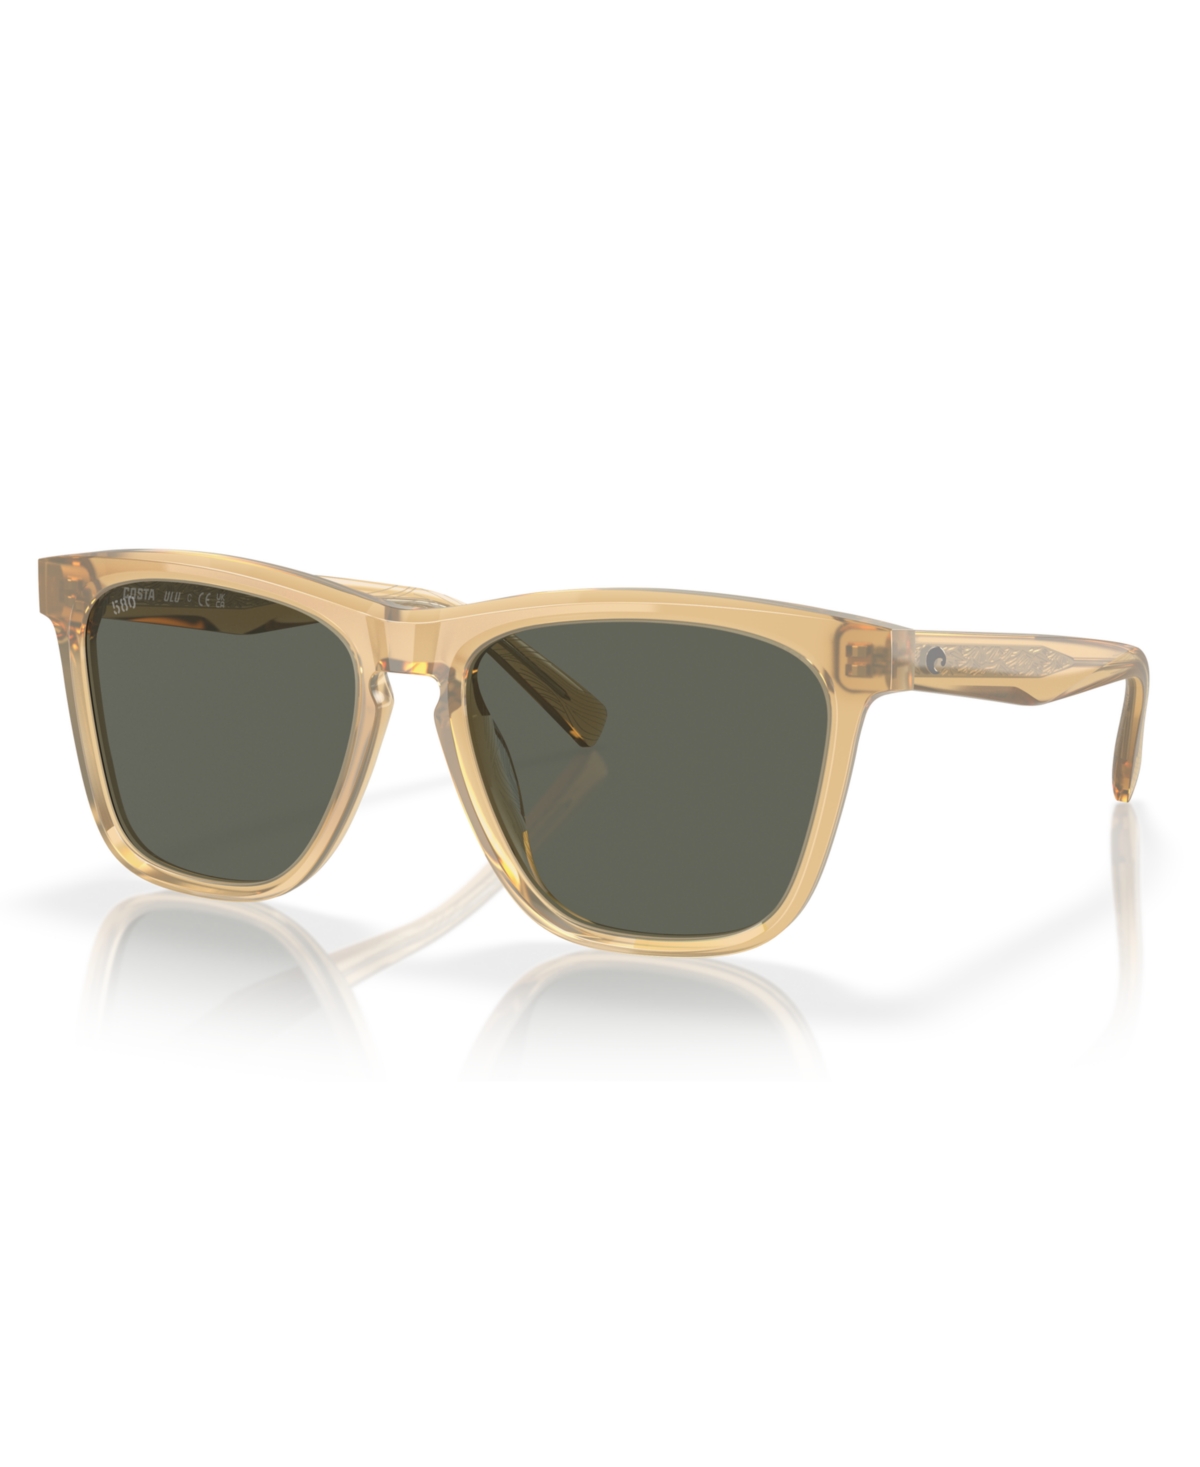 Men's Polarized Sunglasses, Keramas 6S2015 - Olive